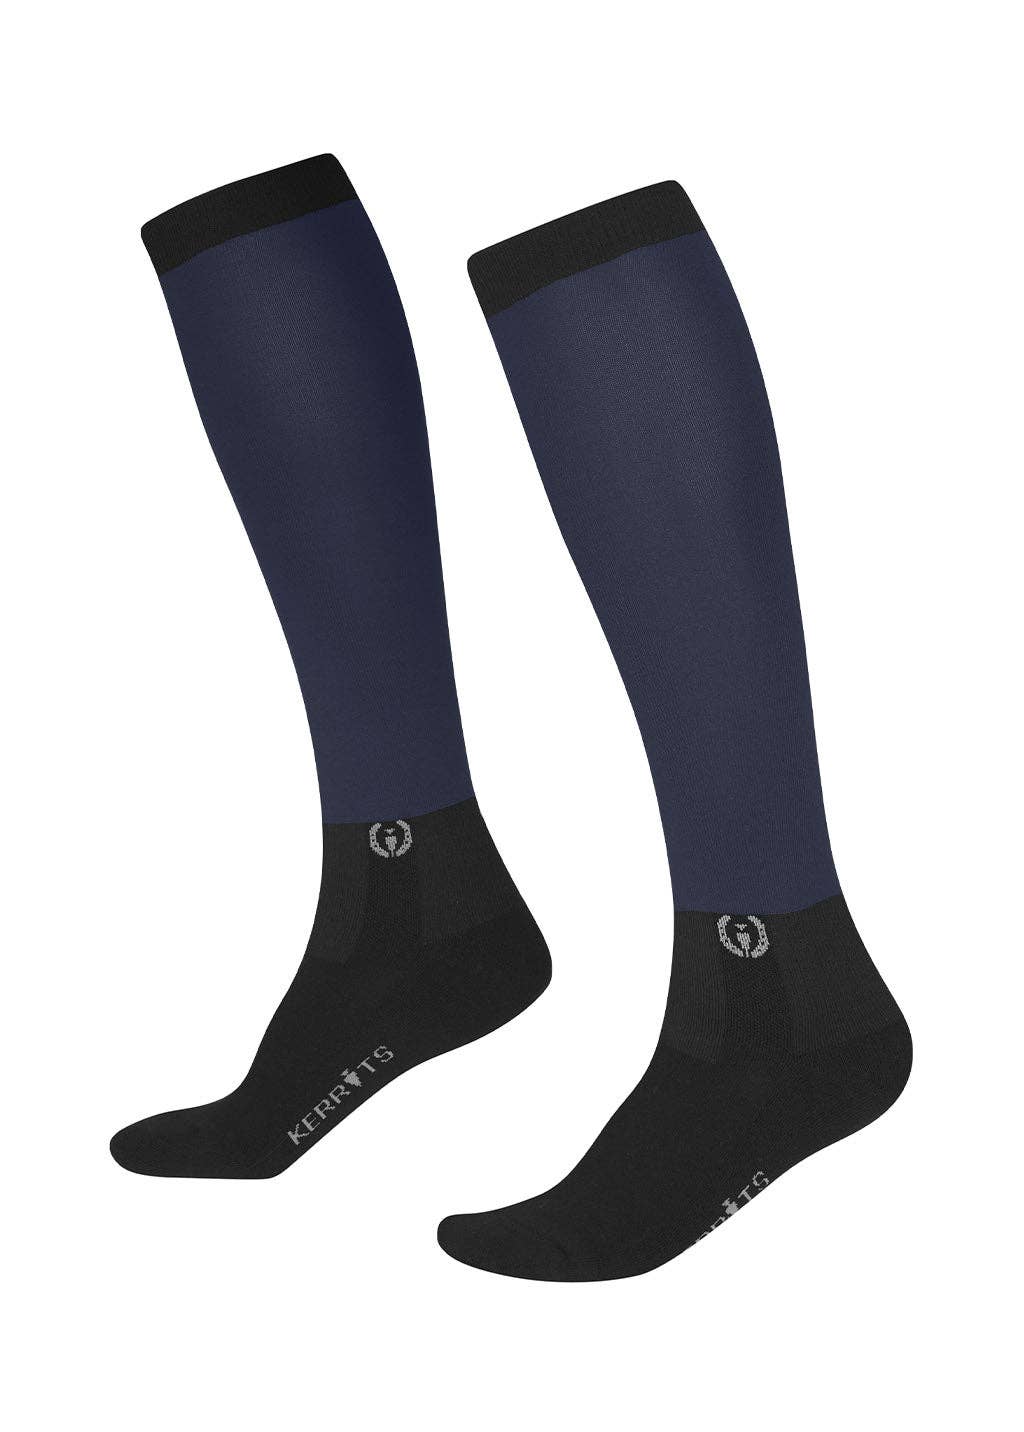 Dual Zone Boot Socks: OBSIDIAN / O/S